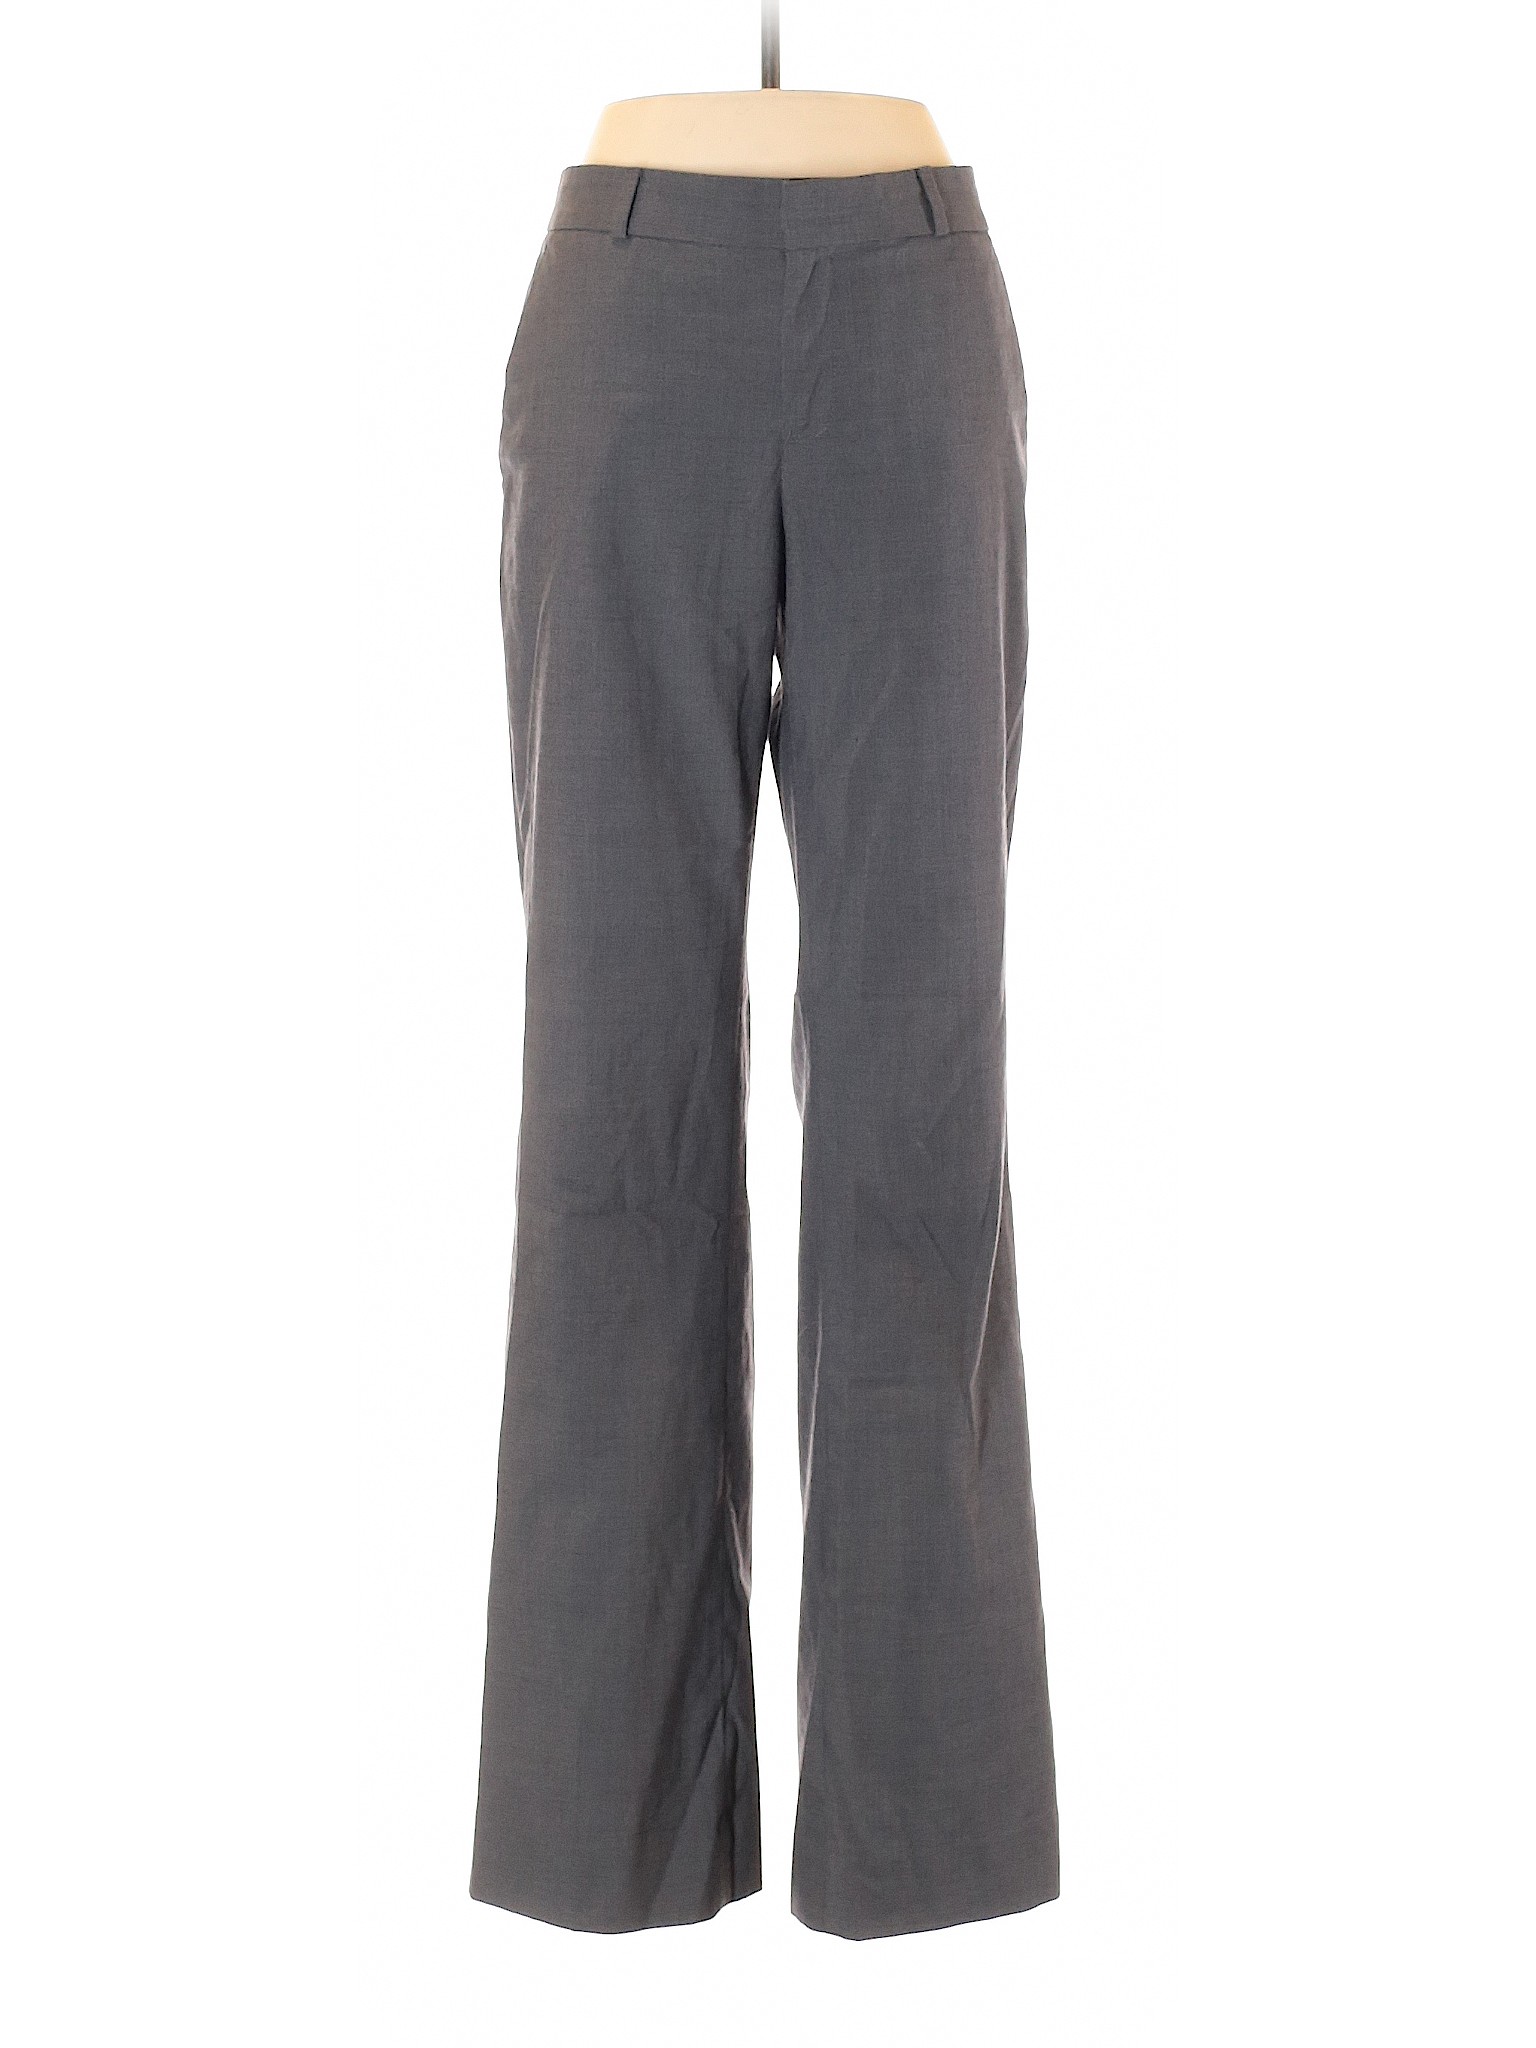 Banana Republic Women Gray Dress Pants 6 | eBay